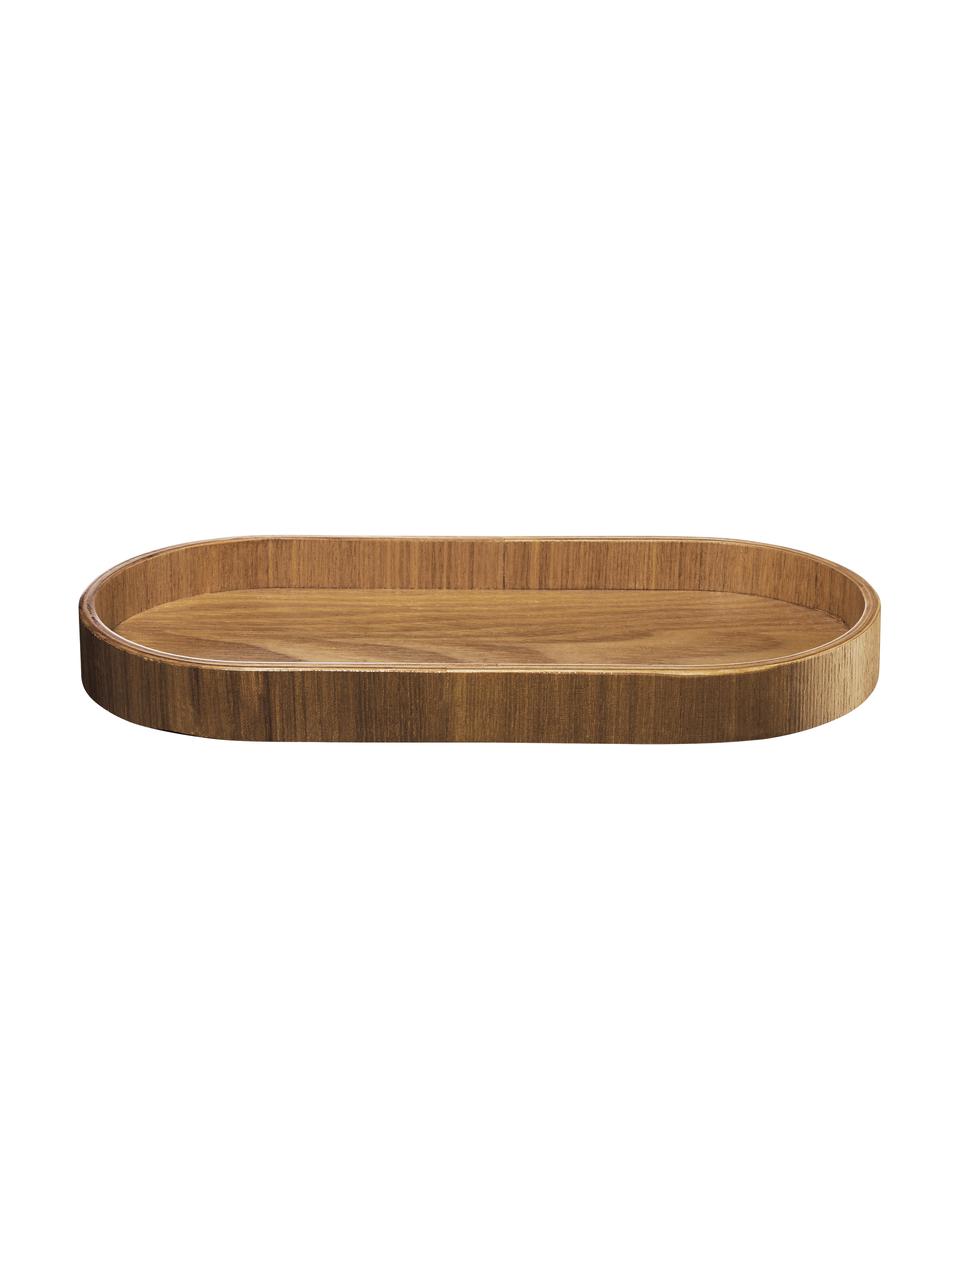 Fuente de madera de sauce Wood, diferentes tamaños, Sauce, Marrón, L 23 x An 11 cm